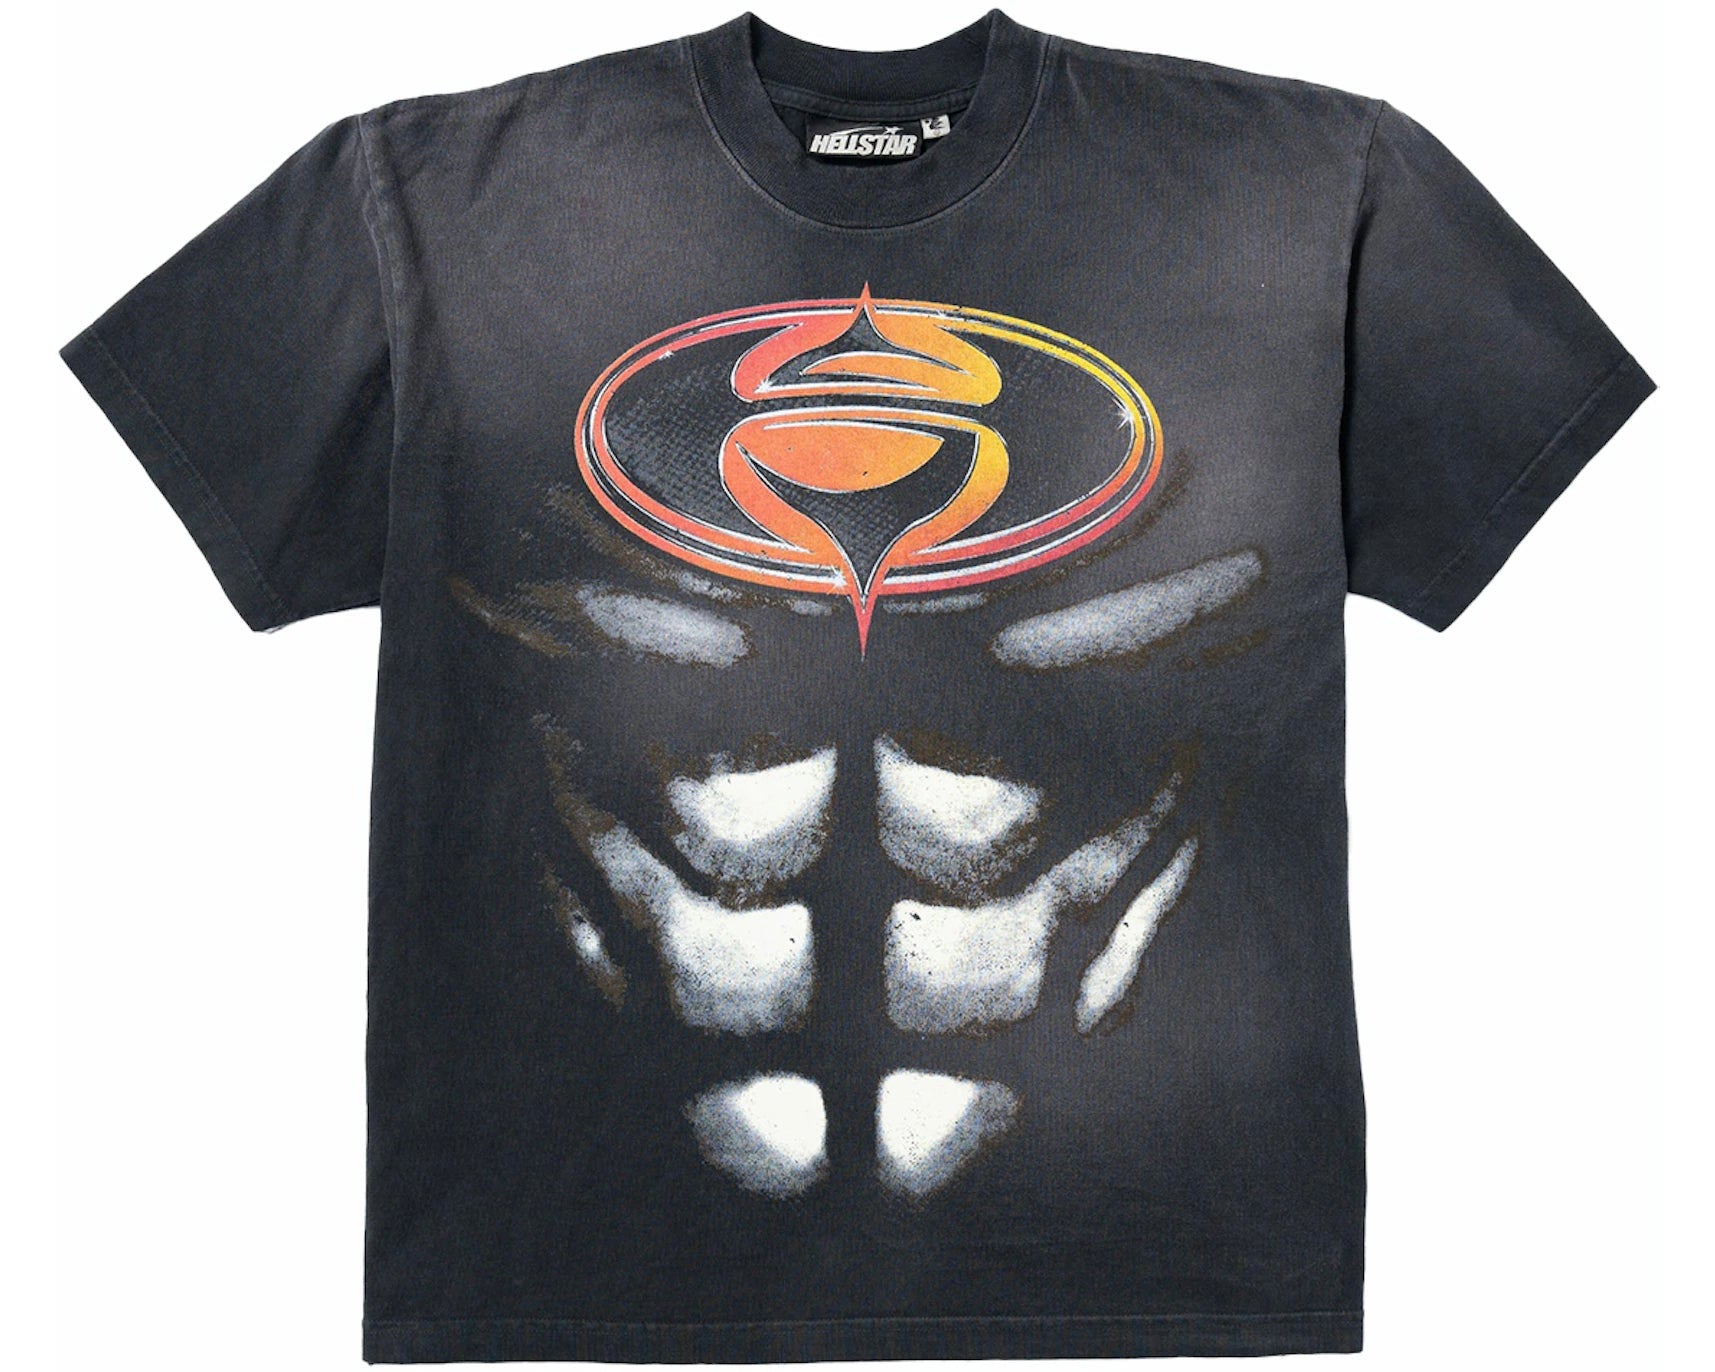 Hellstar Superhero T-Shirt Black